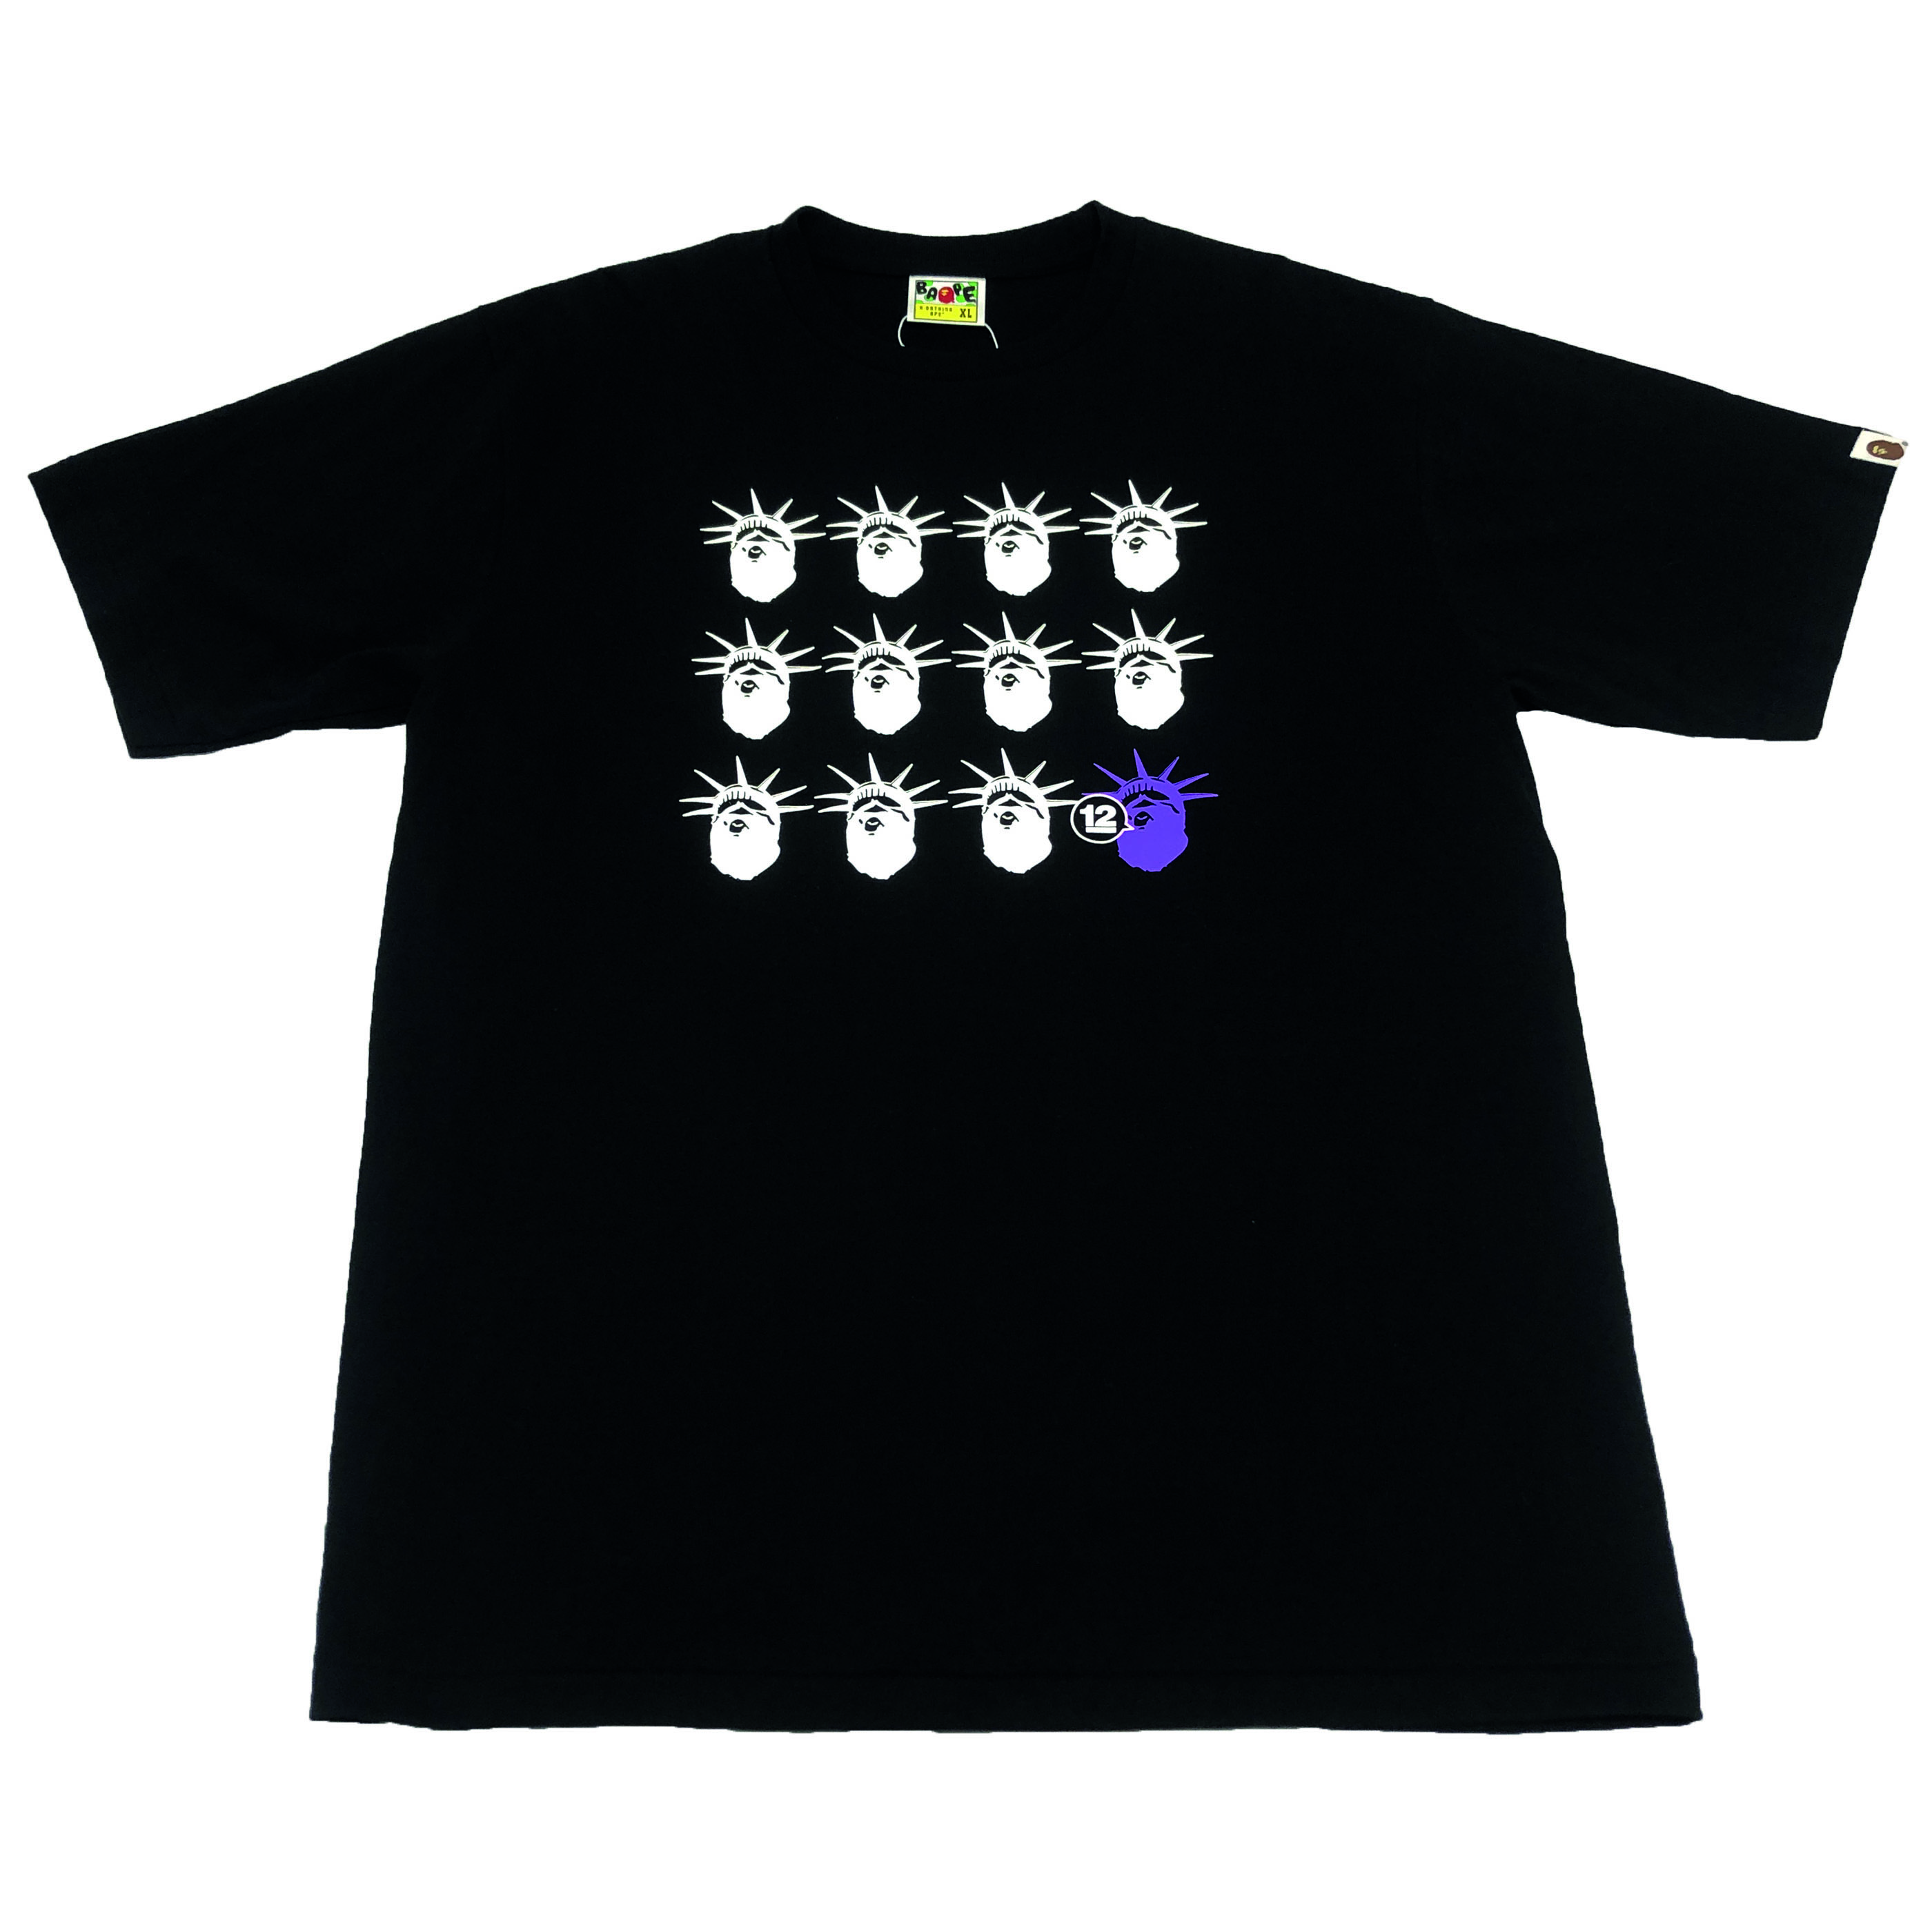 [Bape] NYC 12th Anniversary T-shirt - Size XL